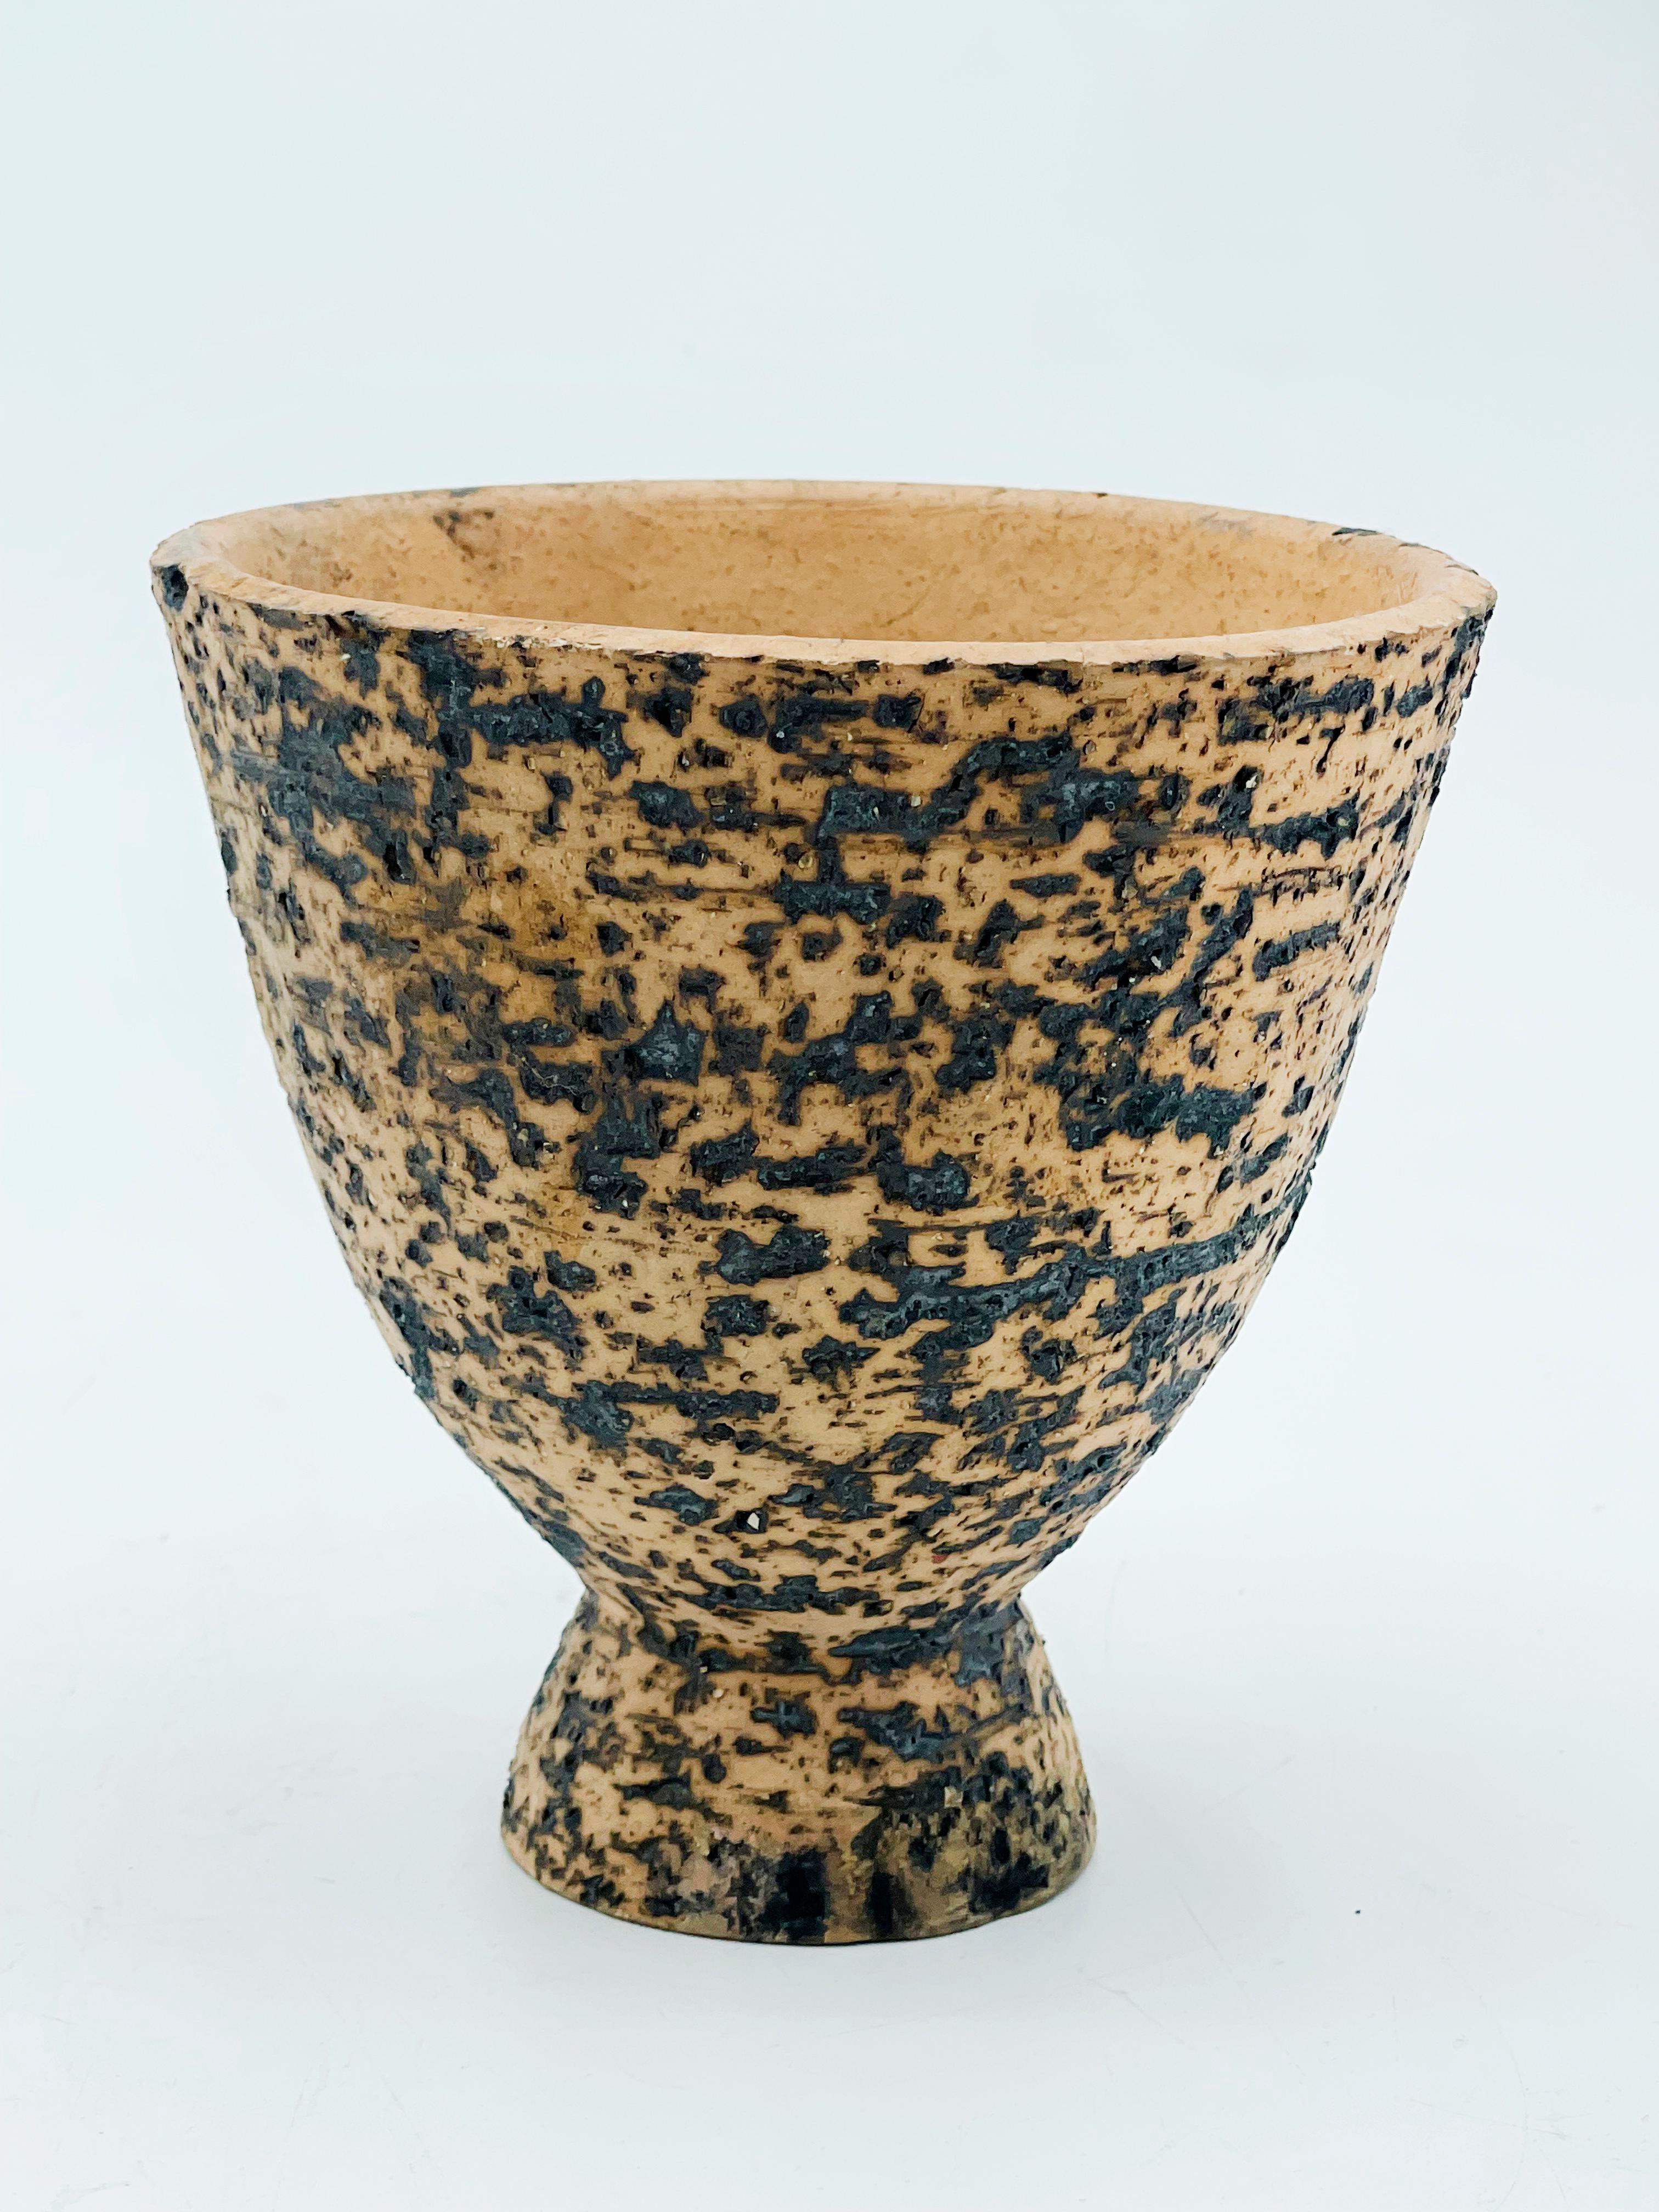 Hand-Carved Jean Besnard Art Deco Ceramic Vase 1930 20th Century Design For Sale